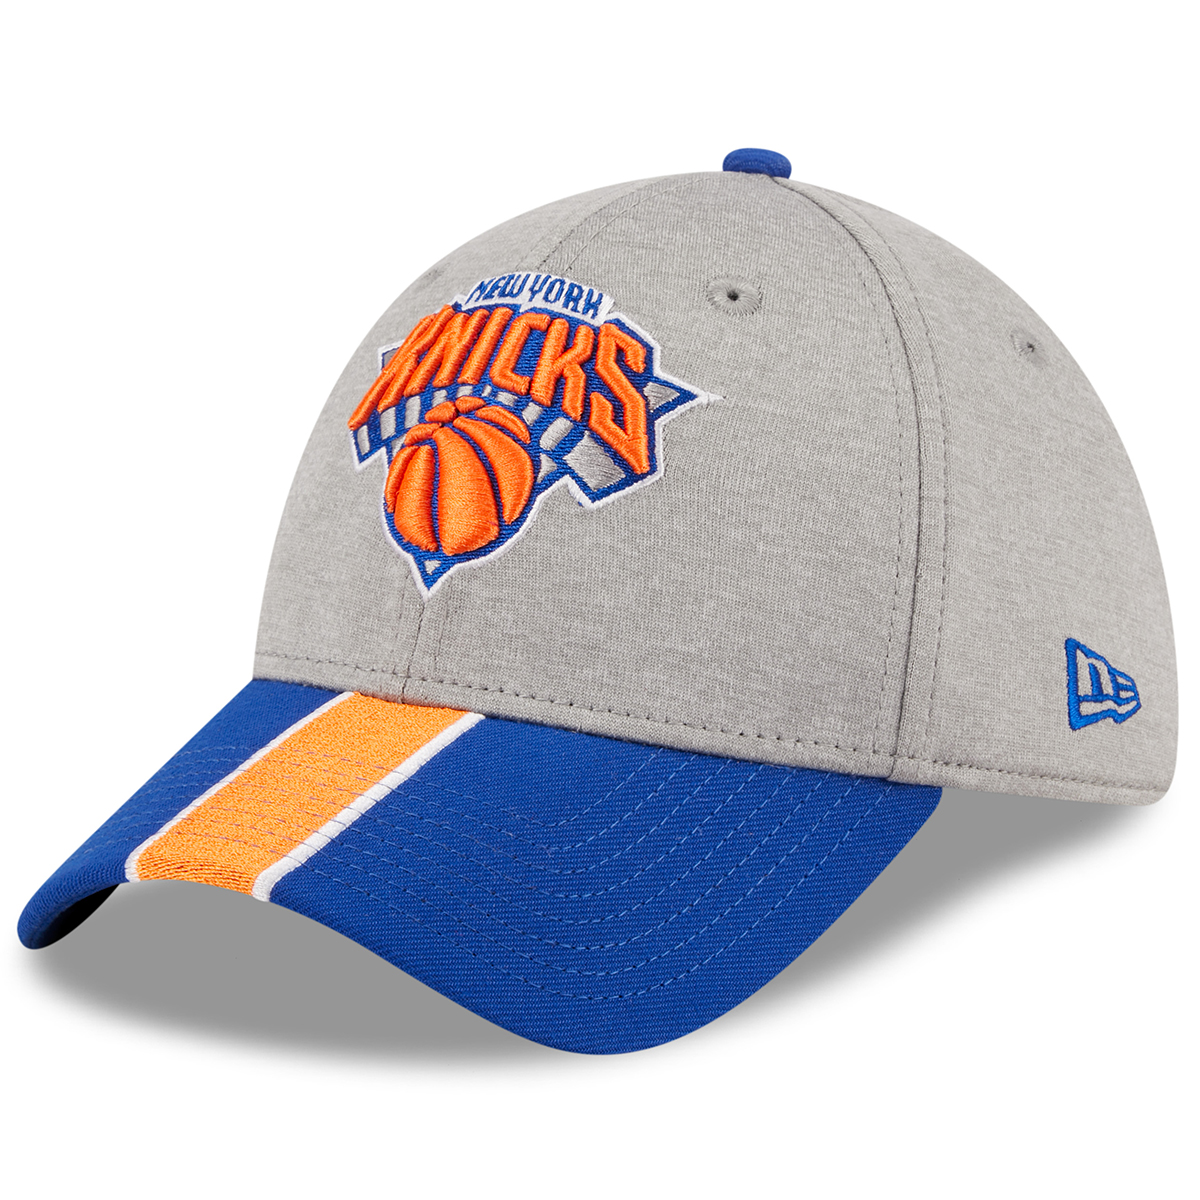 New York Knicks Men's New Era 39Thirty Stretch Fit Cap